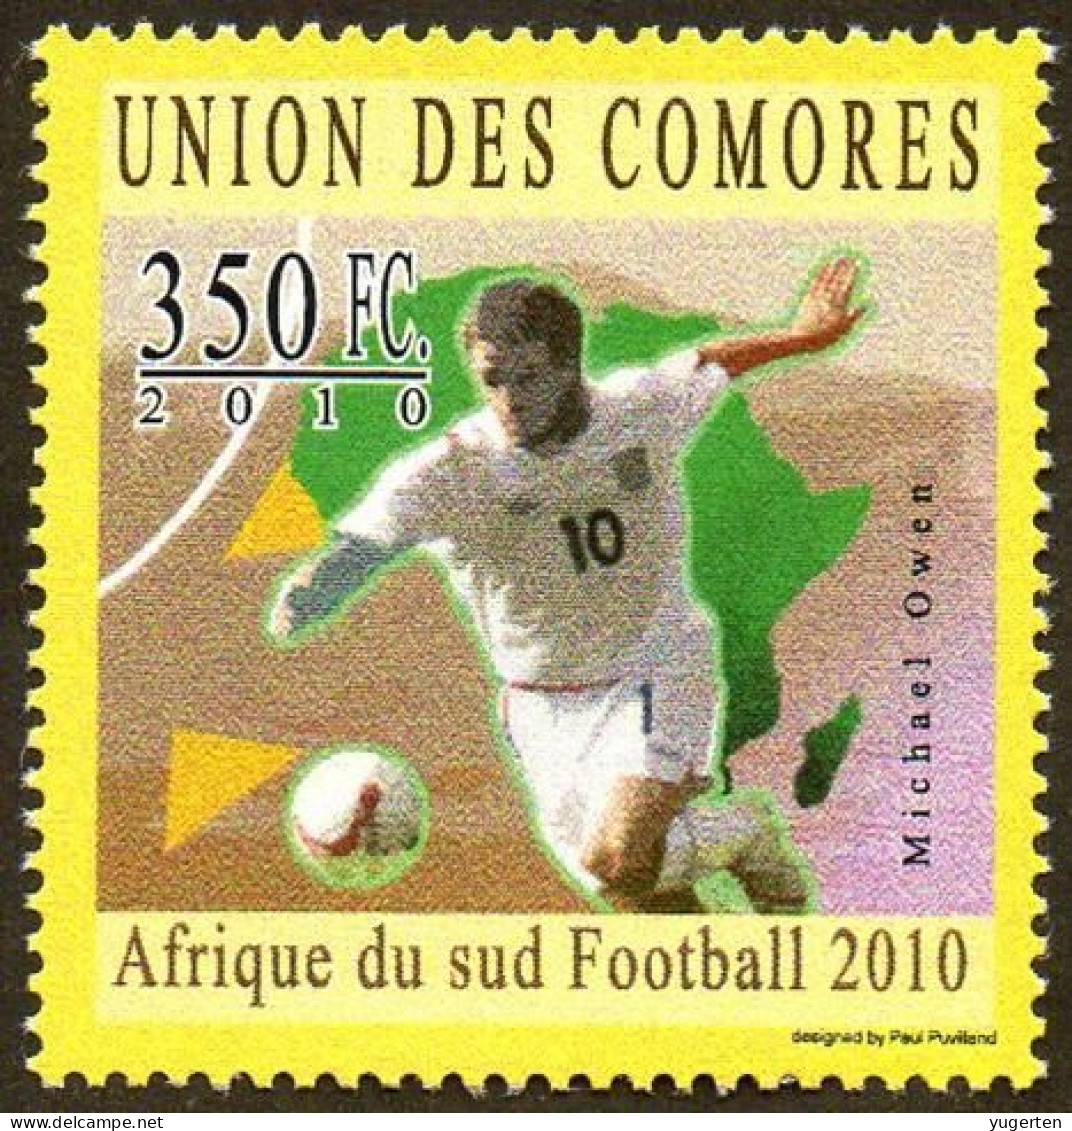 COMORES  - 1v - MNH - Michael Owen - Football England - Fußball Calcio - Manchester United - Liverpool - Real Madrid - 2010 – South Africa